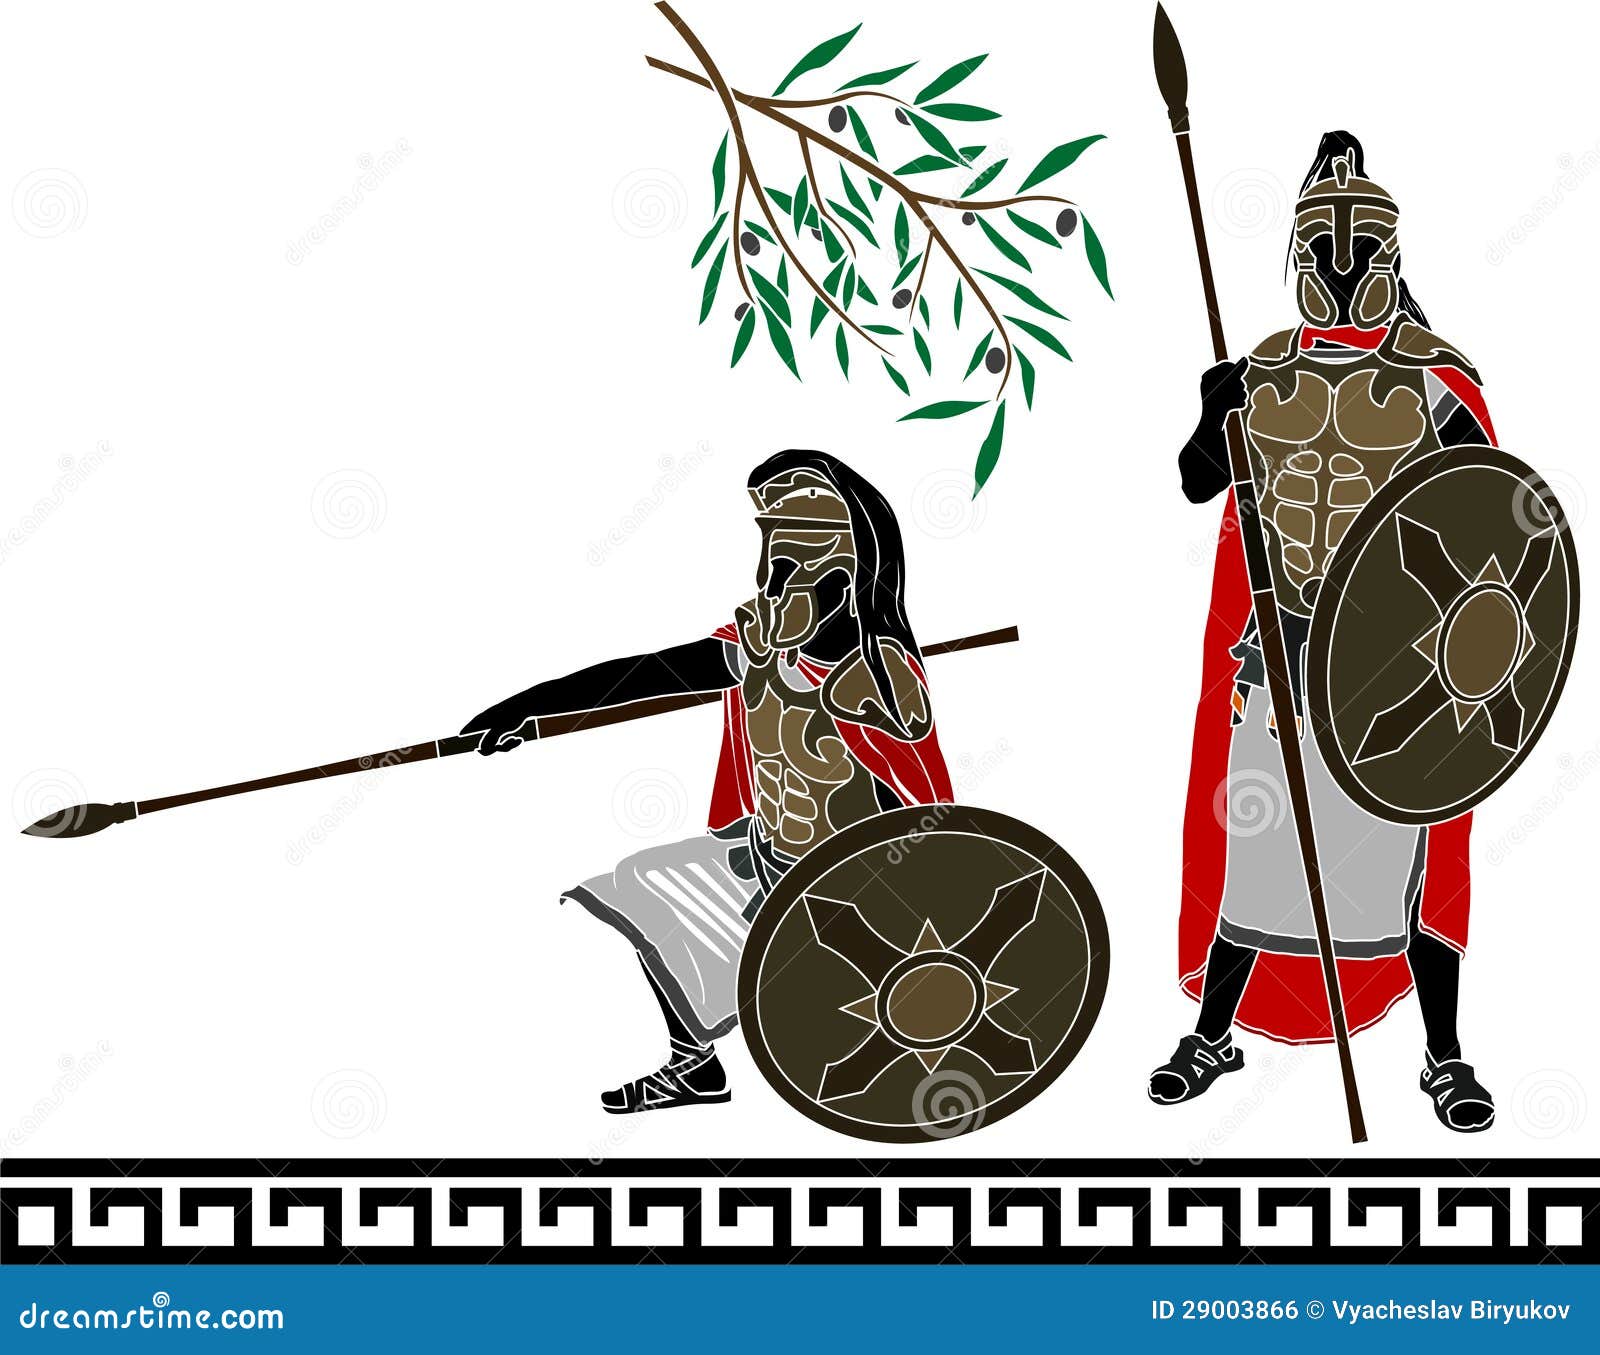 ancient hellenic warriors